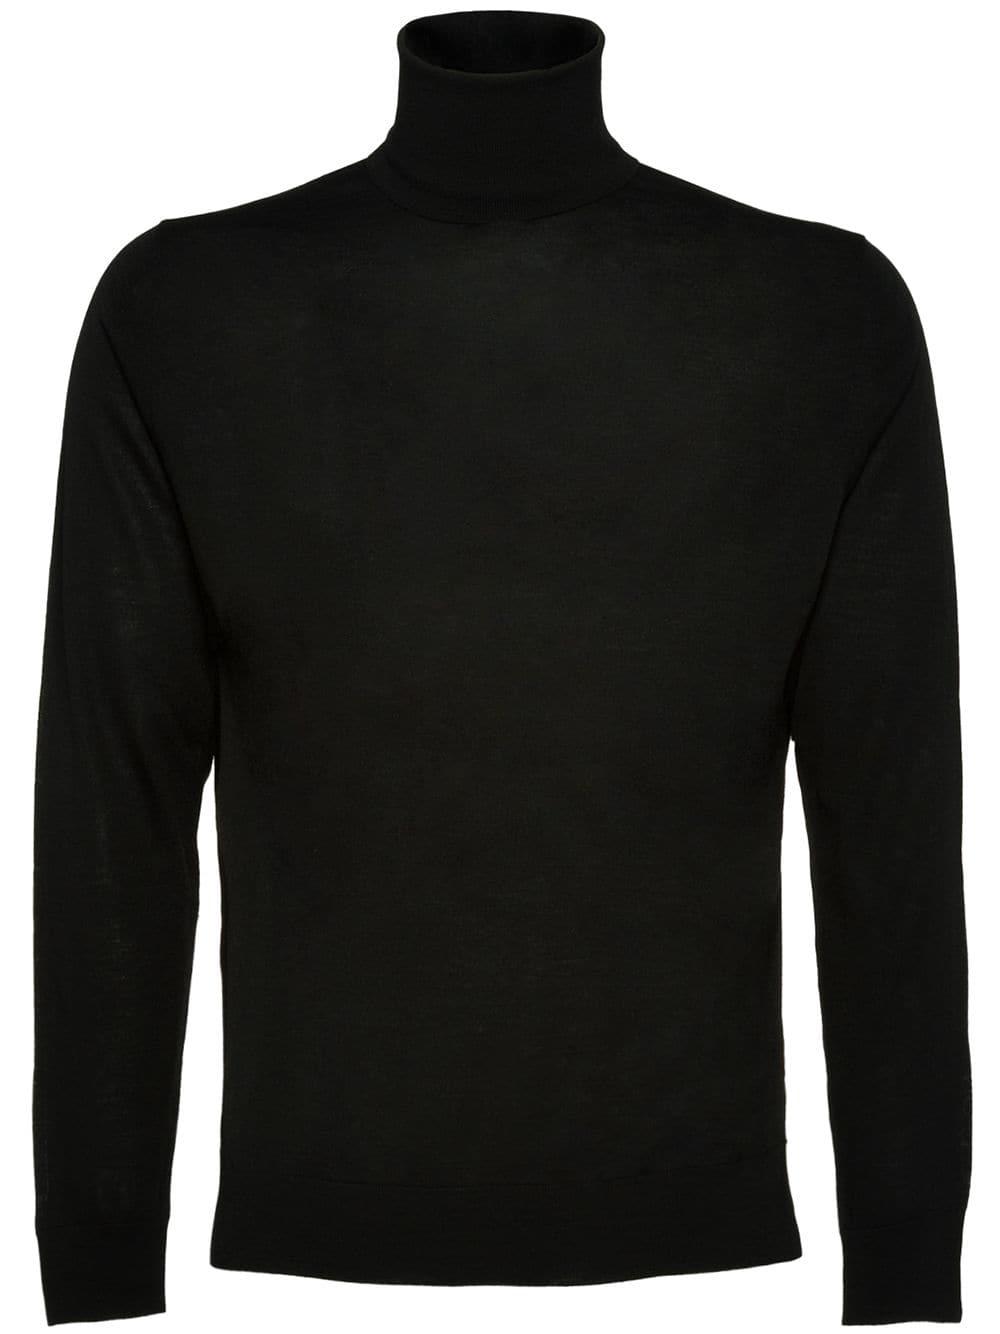 Prada Wool Turtleneck Jumper in Black for Men - Save 34% - Lyst